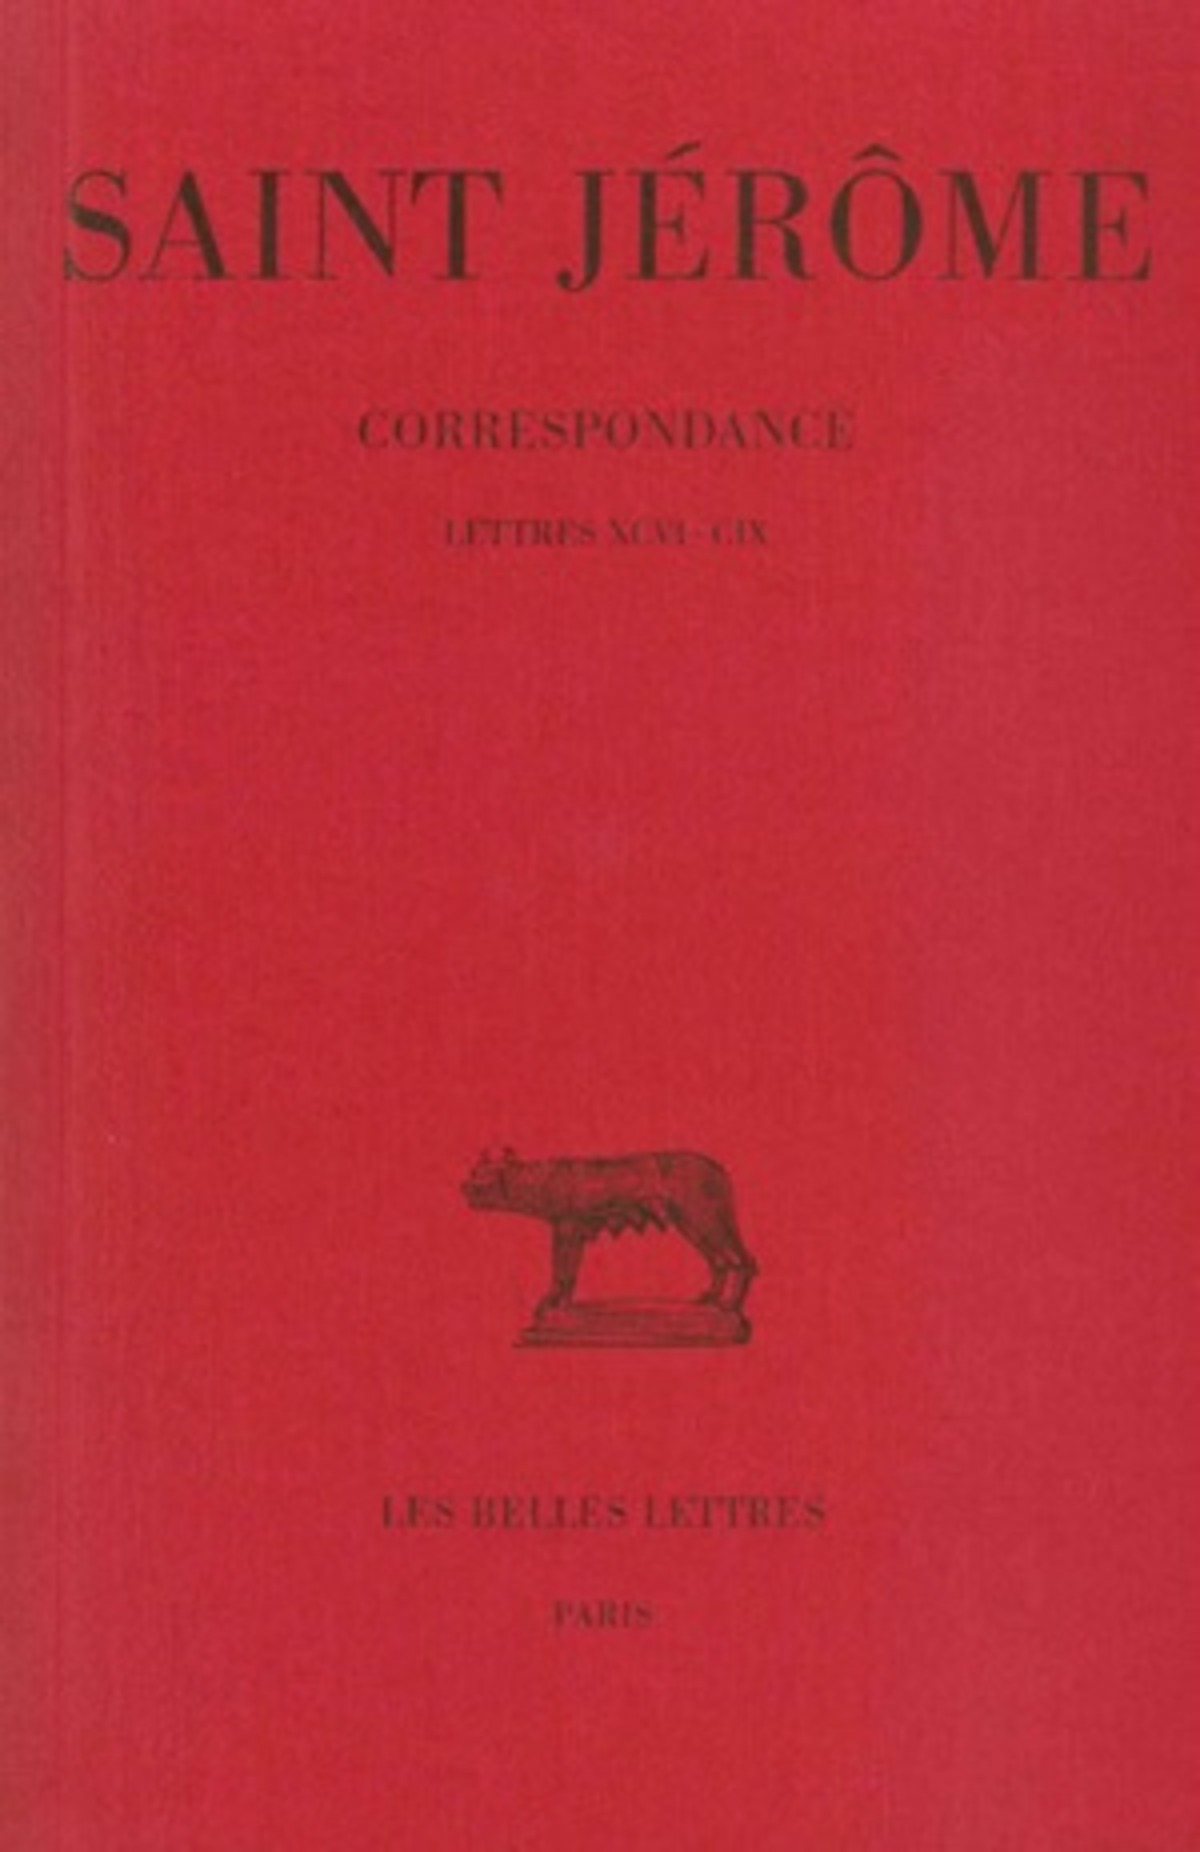 Correspondance. Tome V : Lettres XCVI-CIX